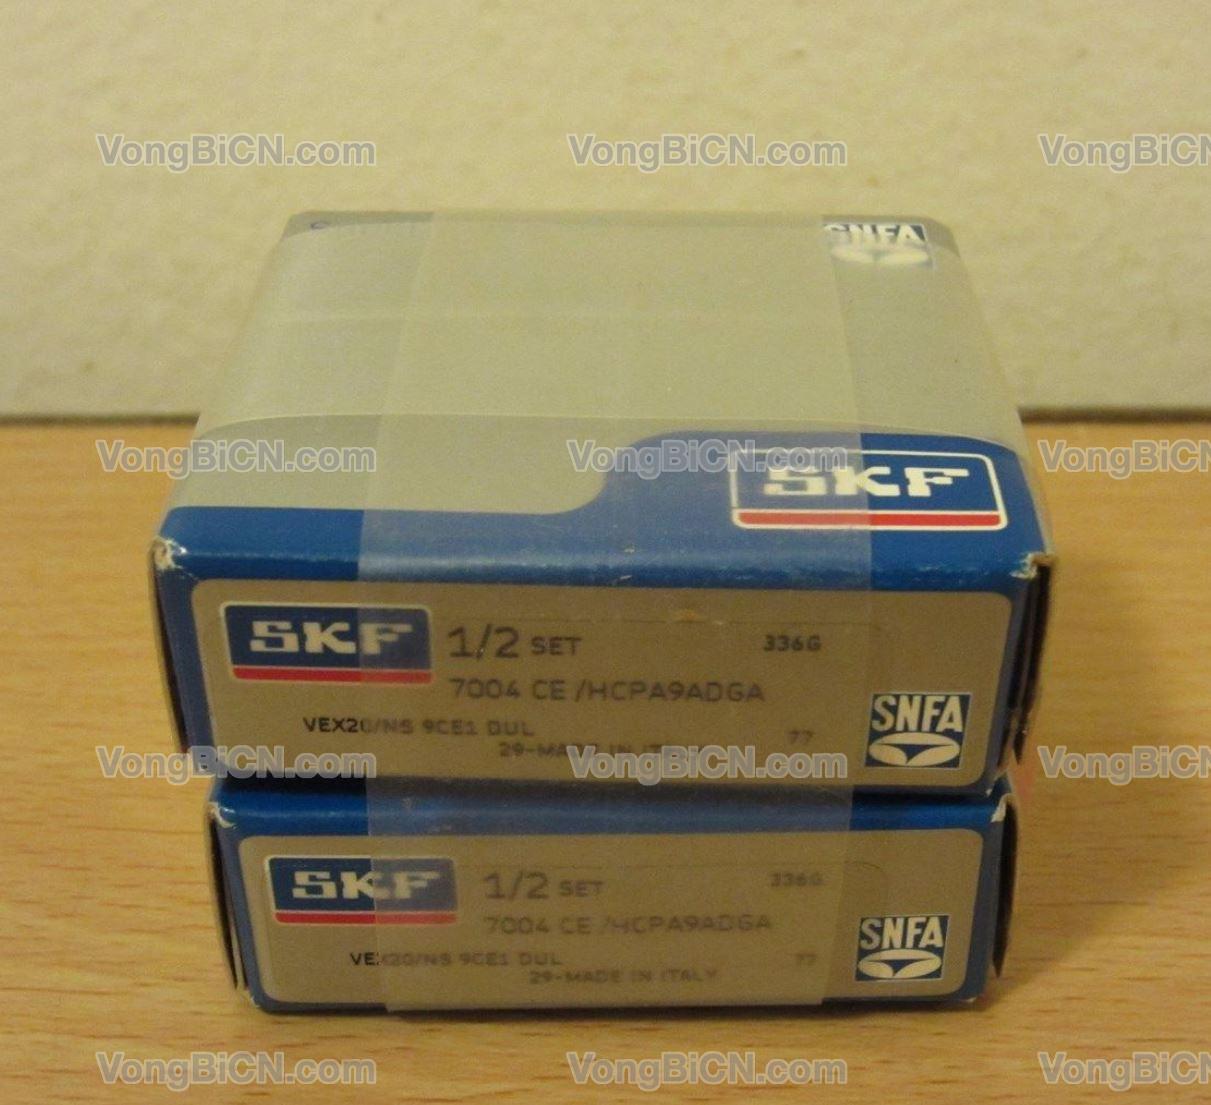 SKF 7004CE-HCP4